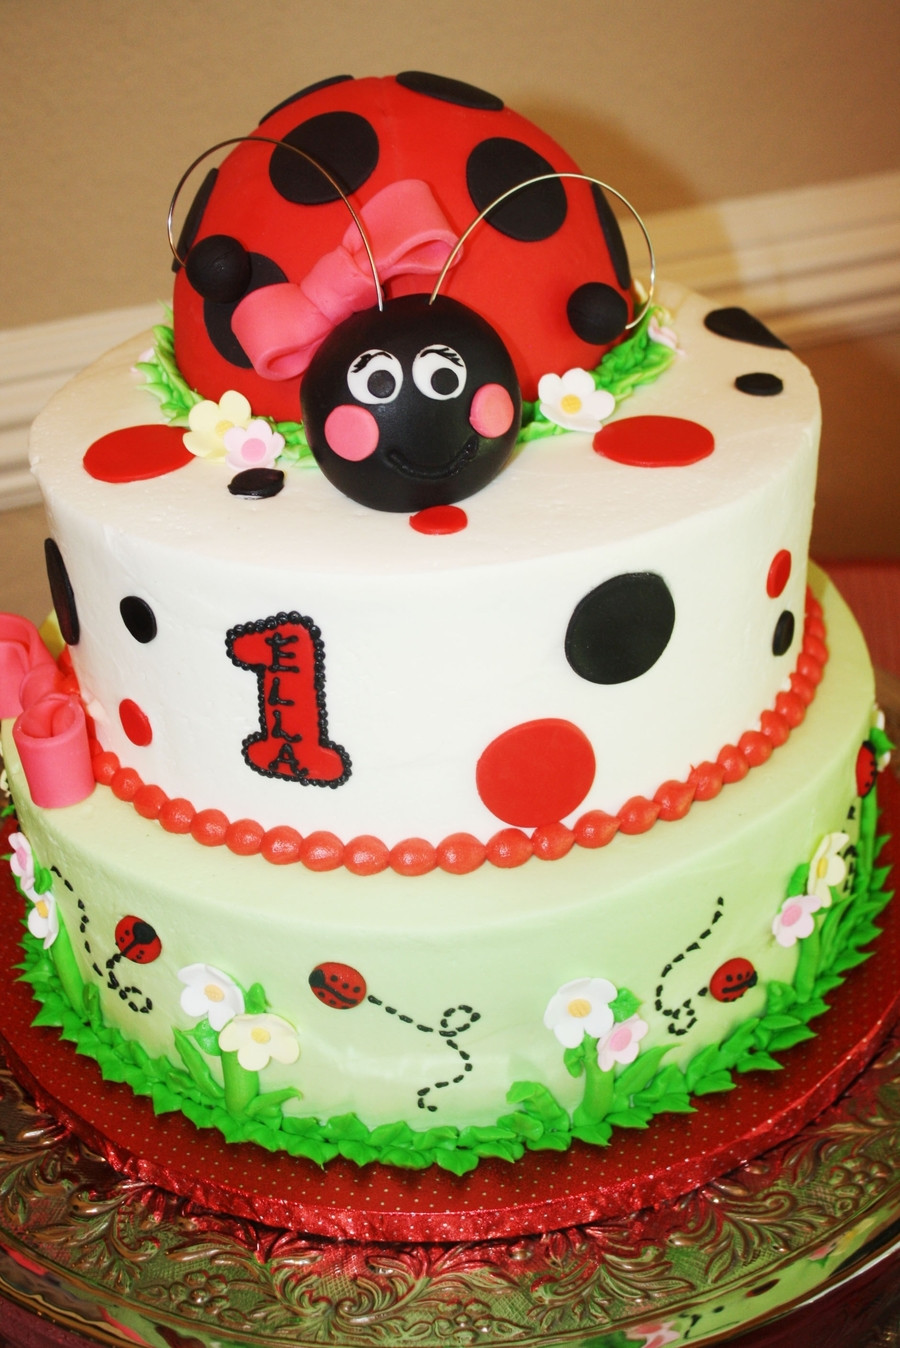 Ladybug Birthday Cakes
 Ladybug 1St Birthday Cake CakeCentral